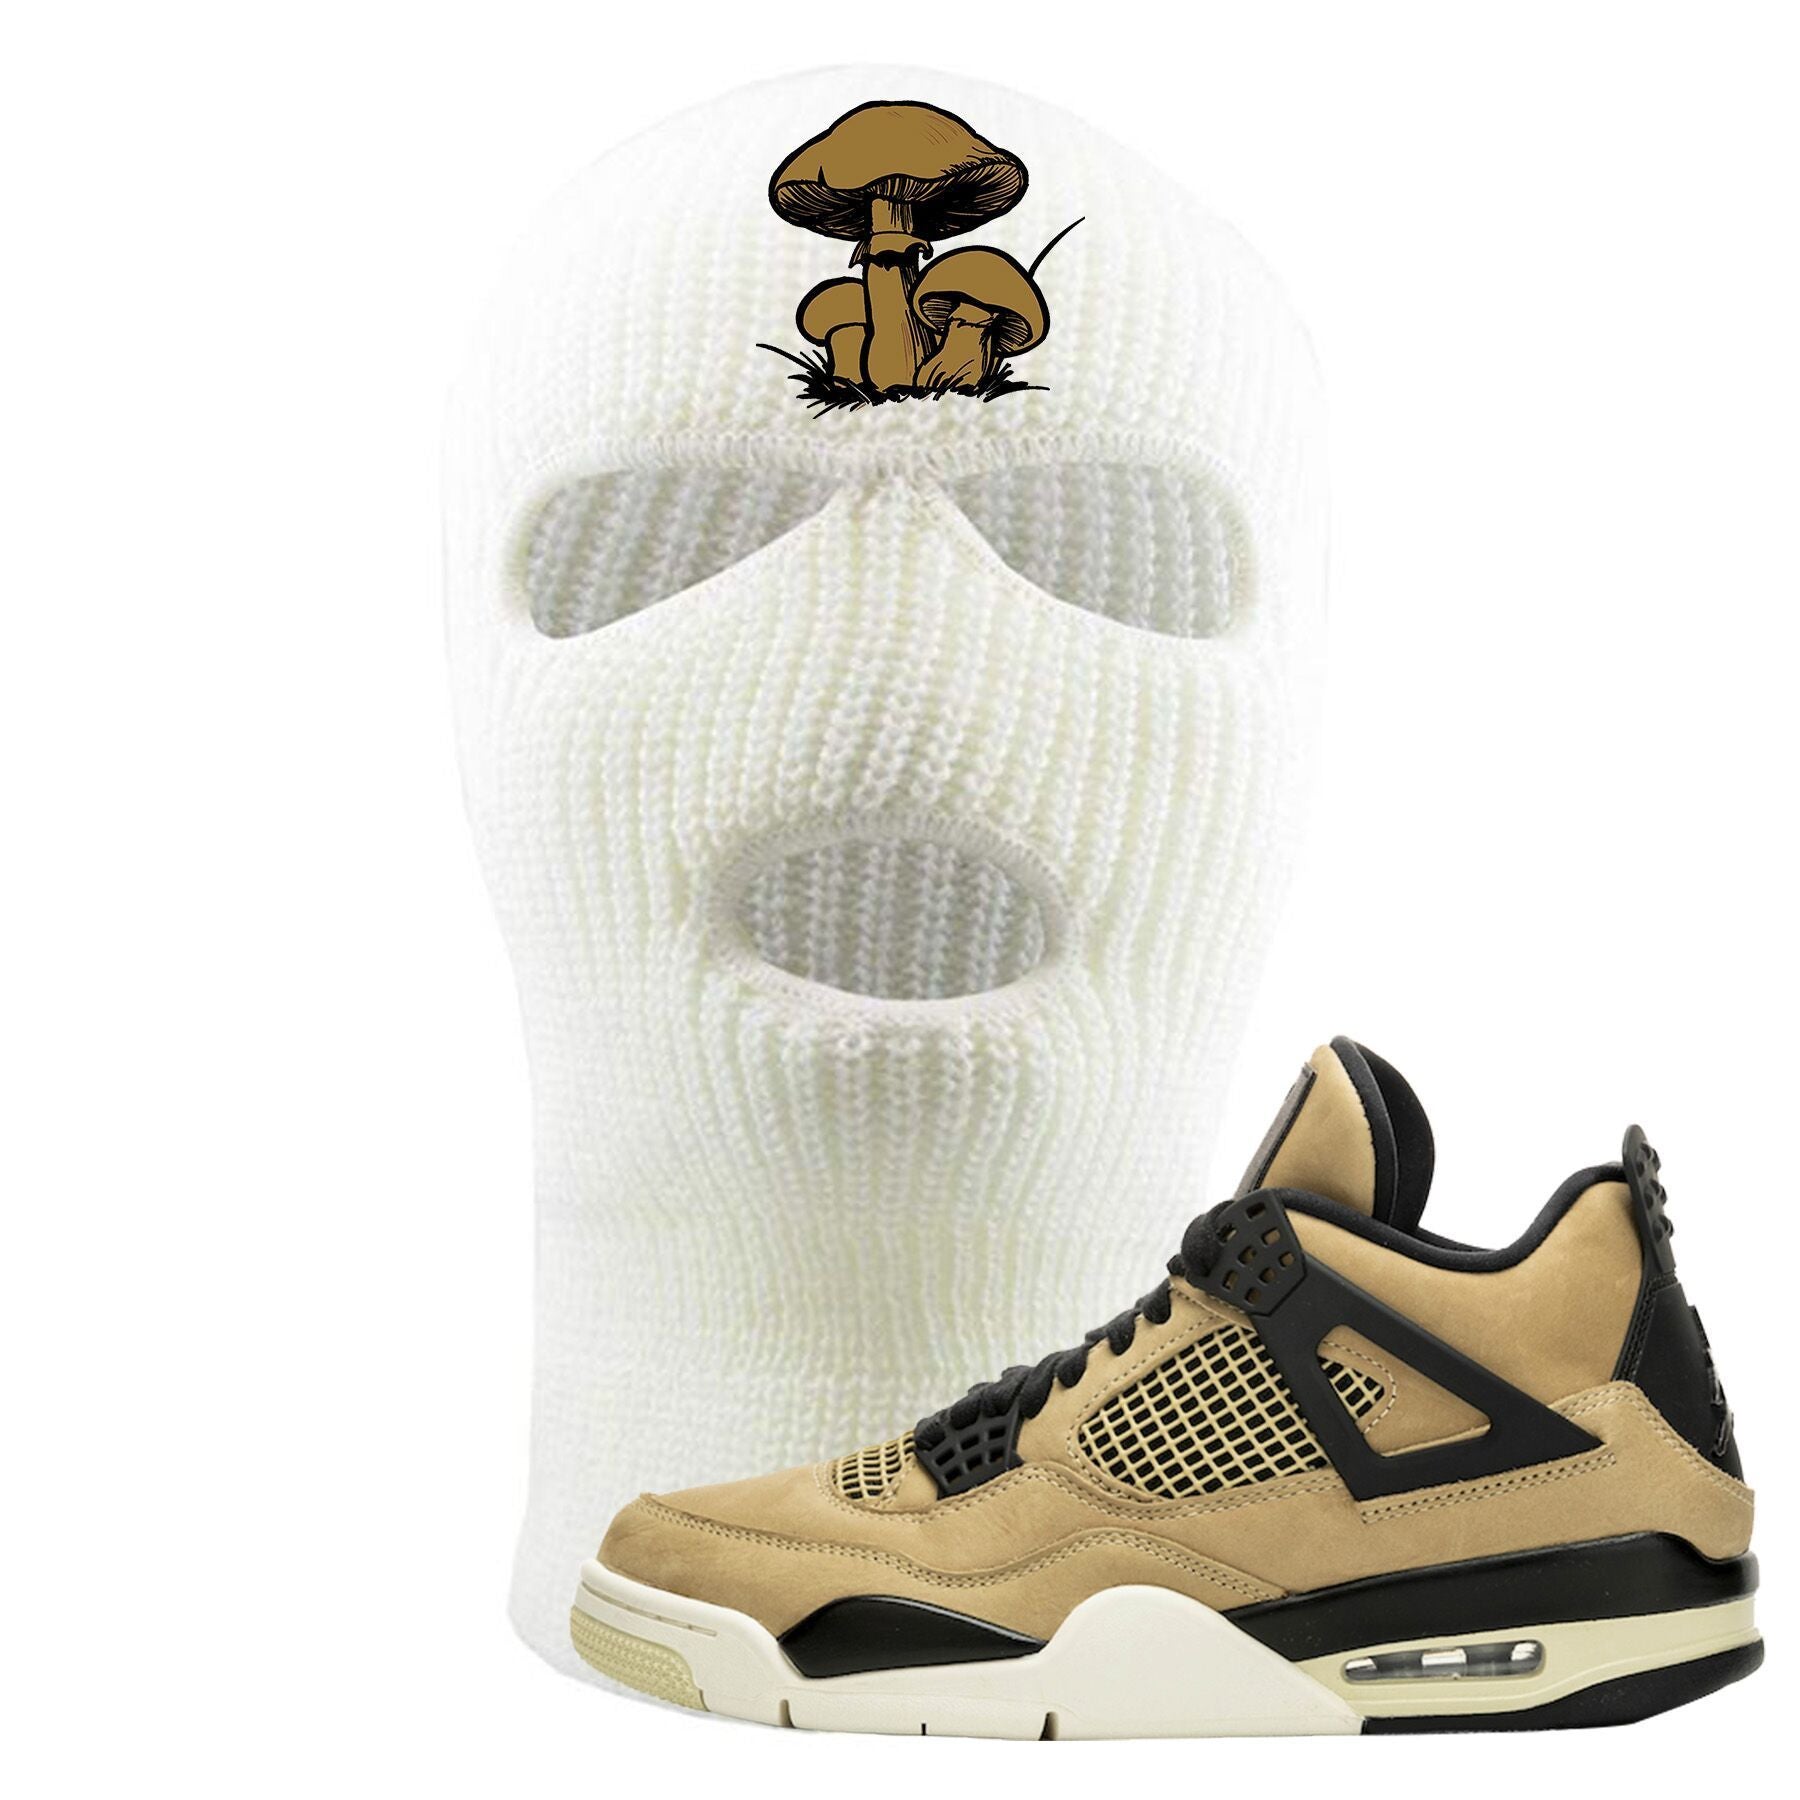 Jordan 4 WMNS Mushroom Sneaker Matching White Eat Me Ski Mask